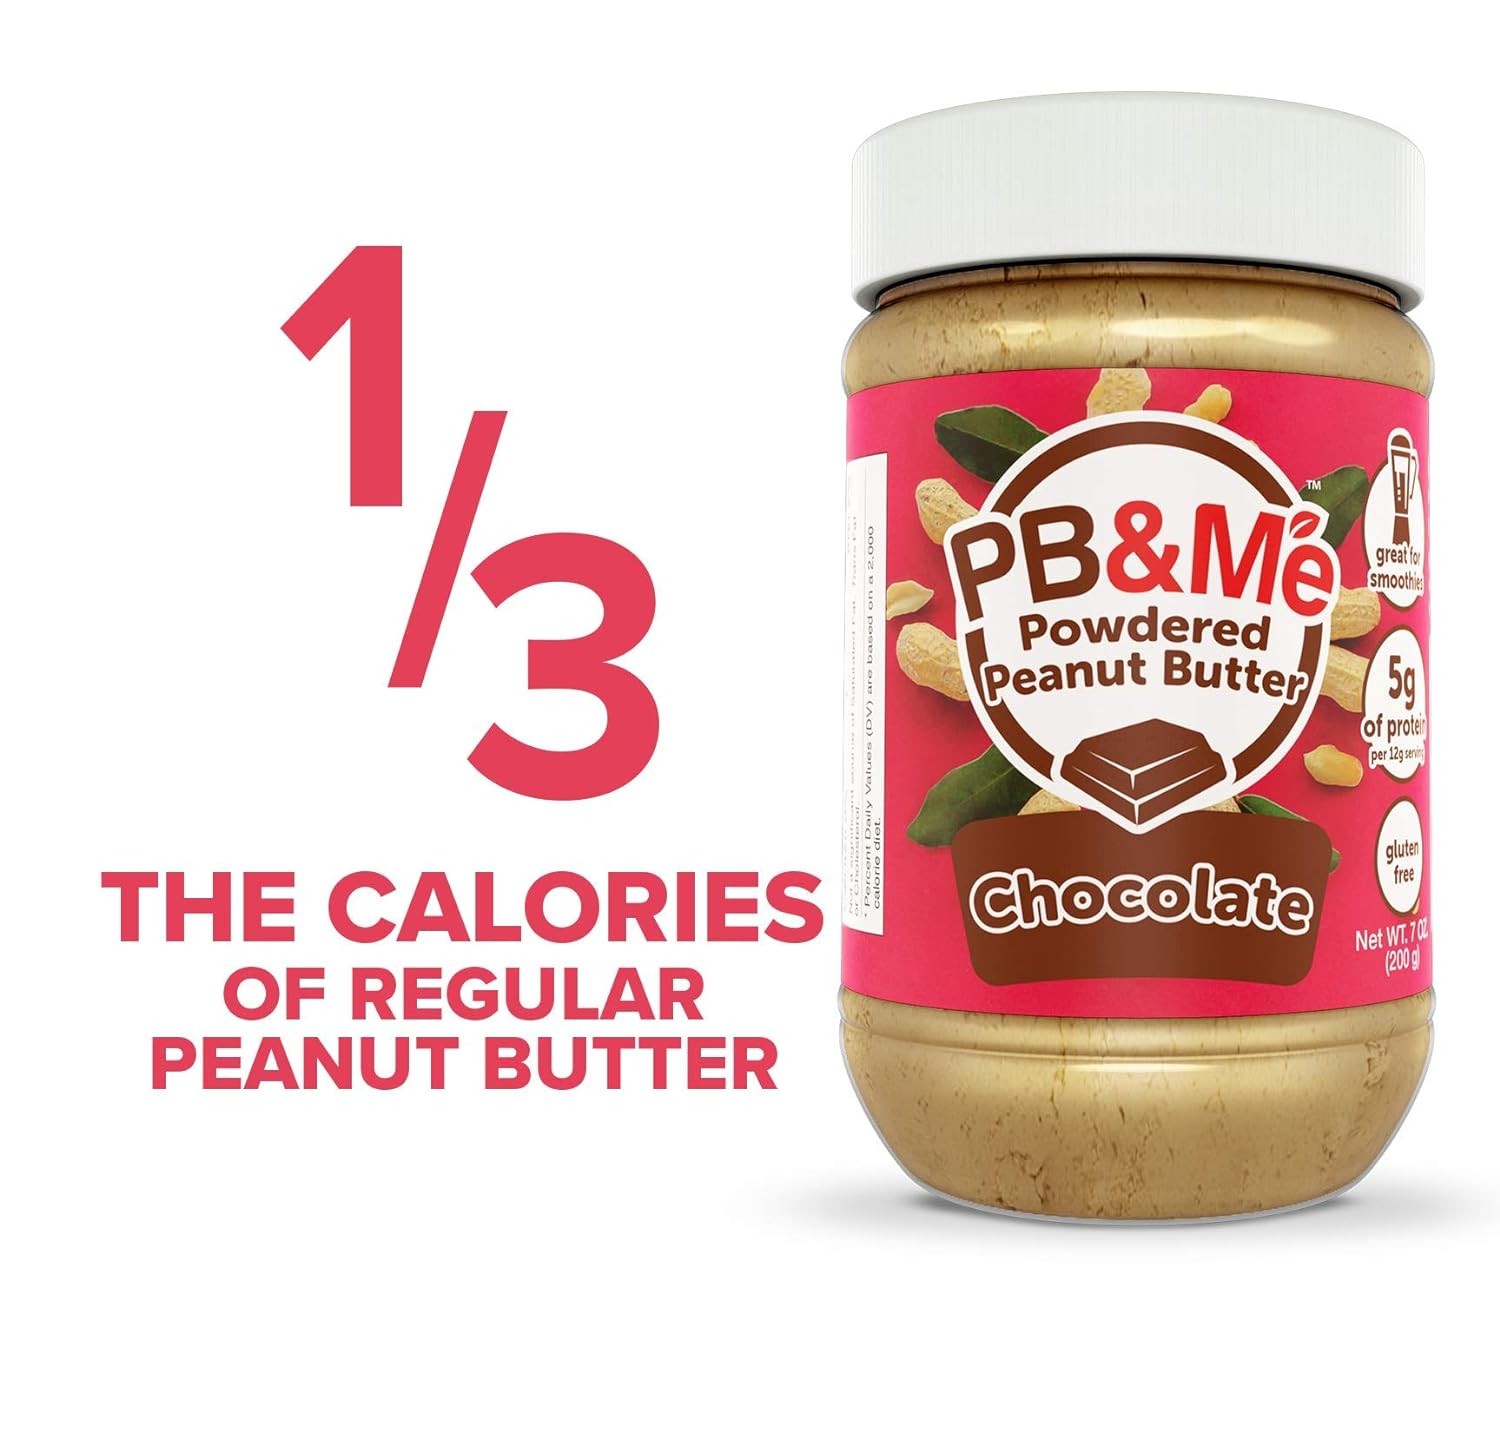 PB&Me Powdered Peanut Butter Chocolate / 200g